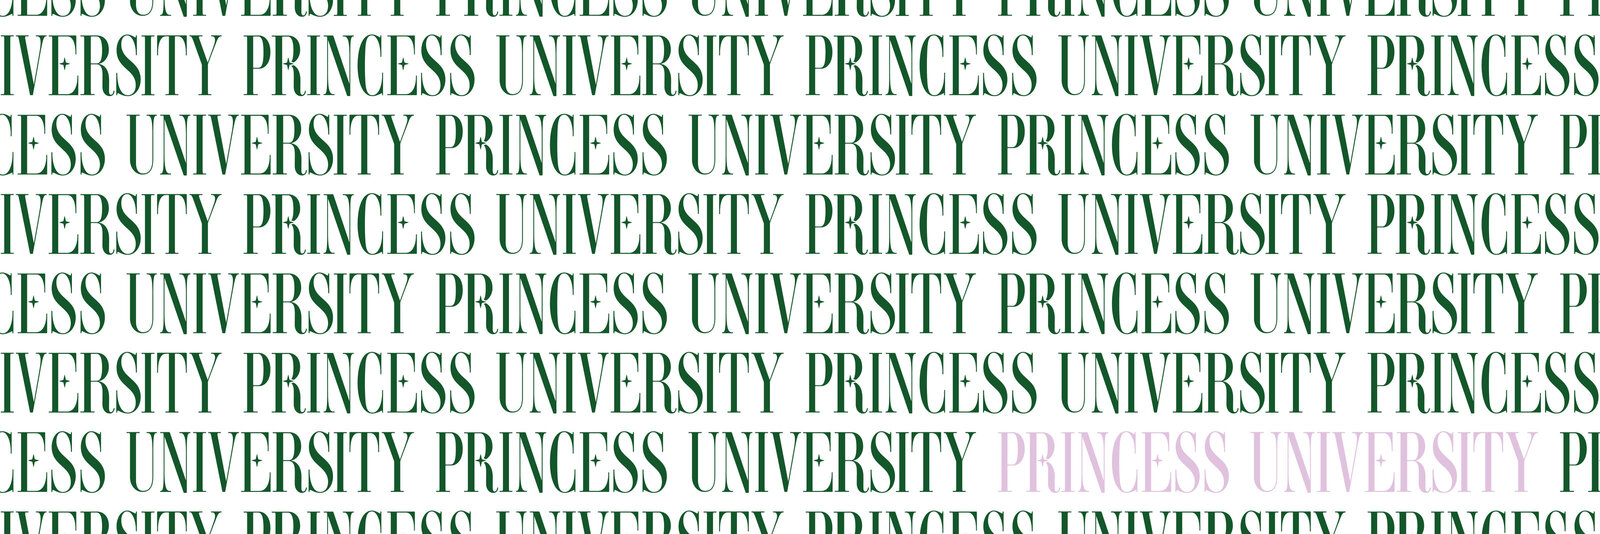 Paige-Firnberg-Design-Our-Work-Portfolio-Princess-University7